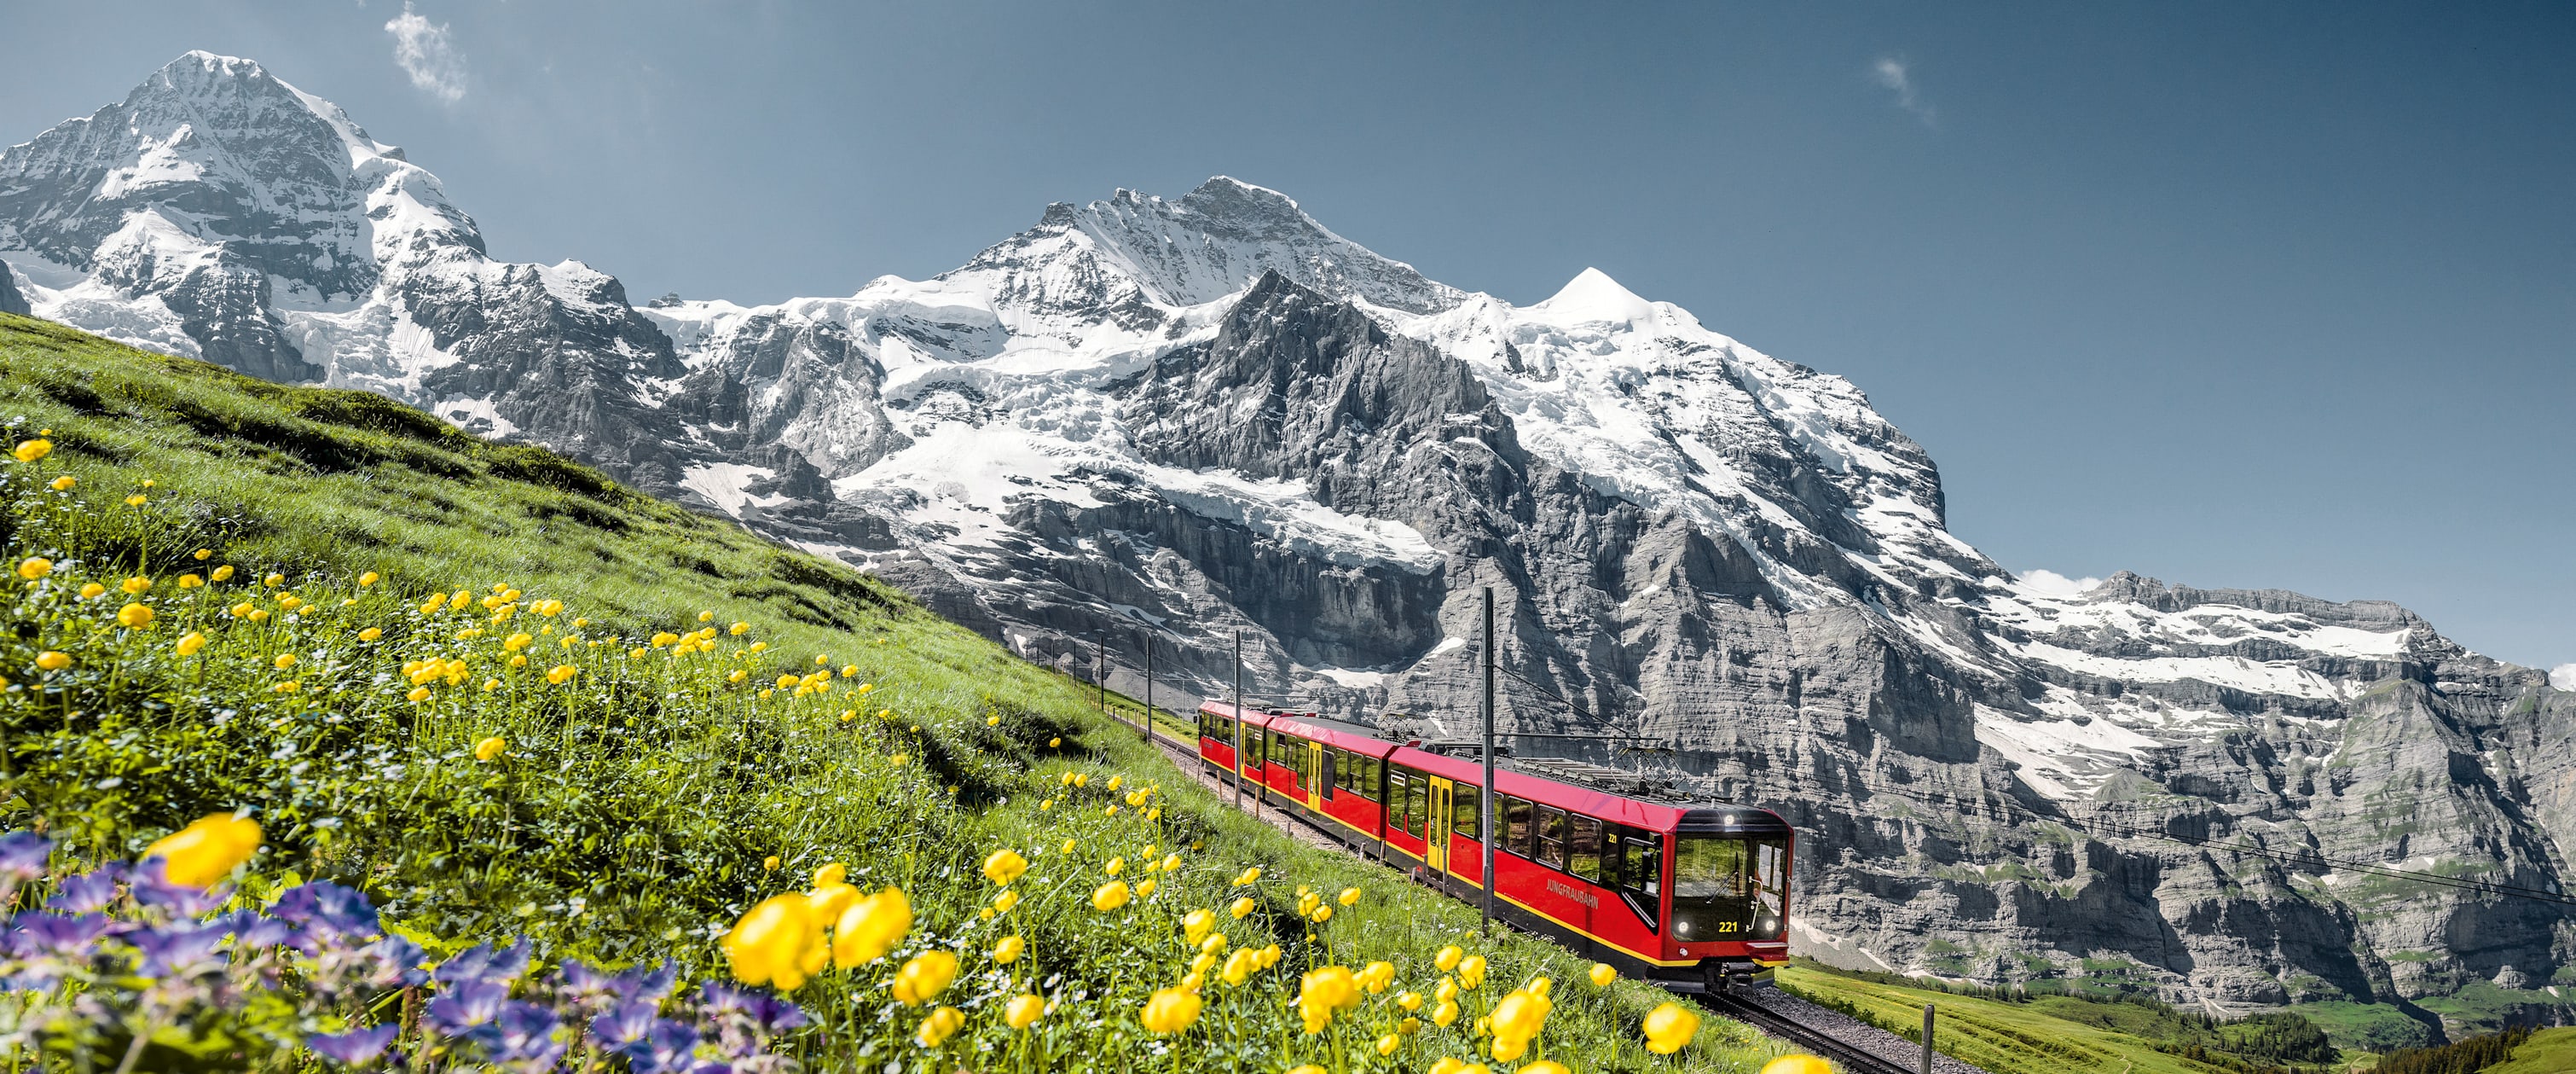 Jungfrau Railway moench jungfrau été 03